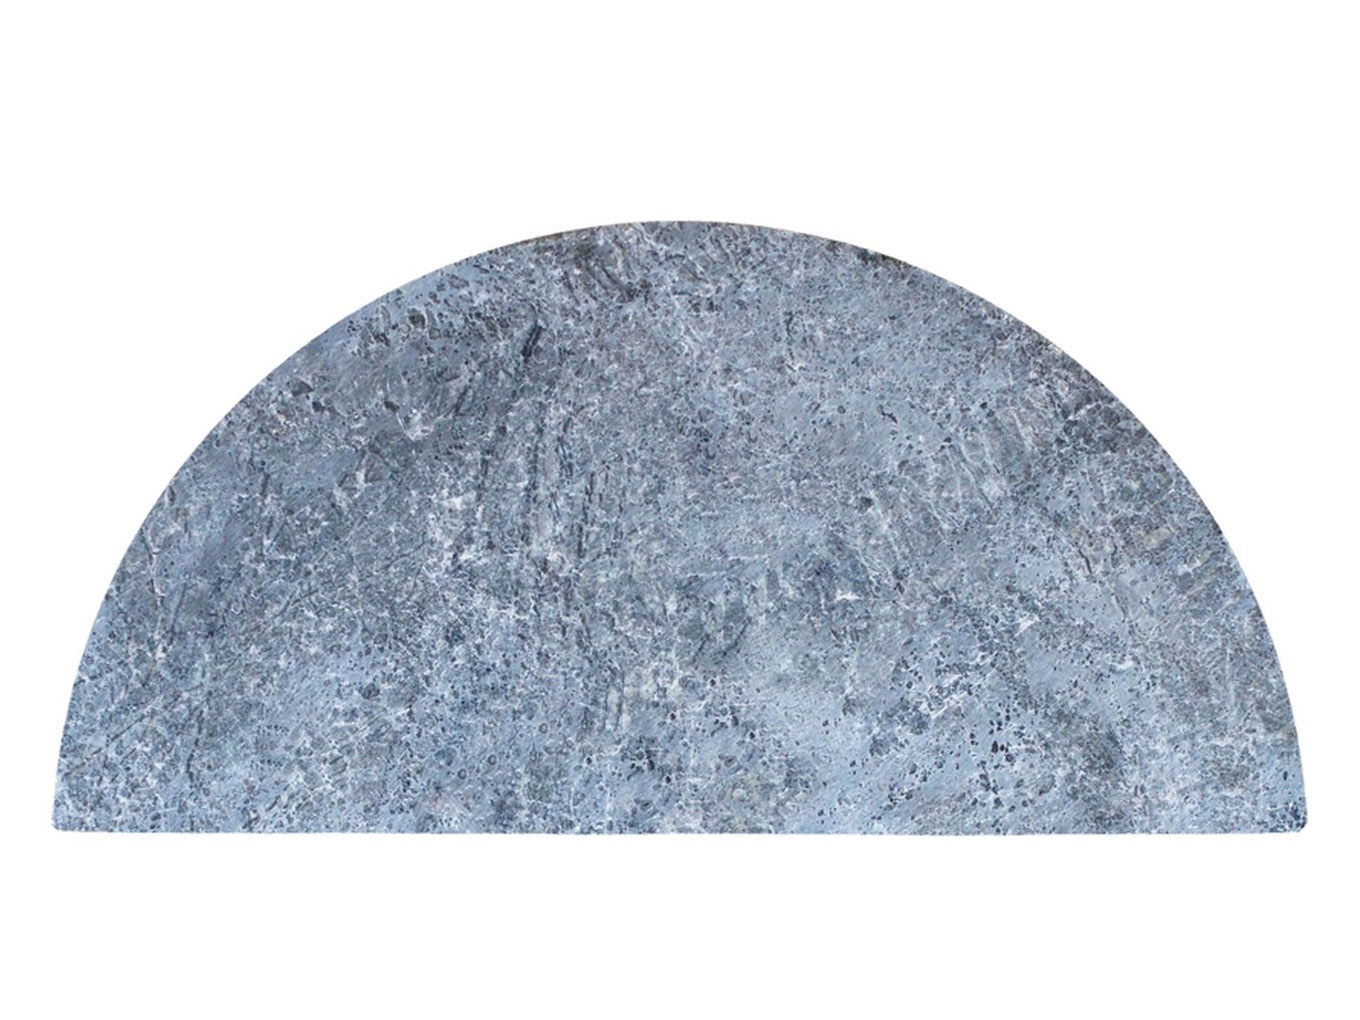 Kamado Joe NZ BBQ Stone Soapstone Slab For Classic 18" Ceramic Grill sold in NZ